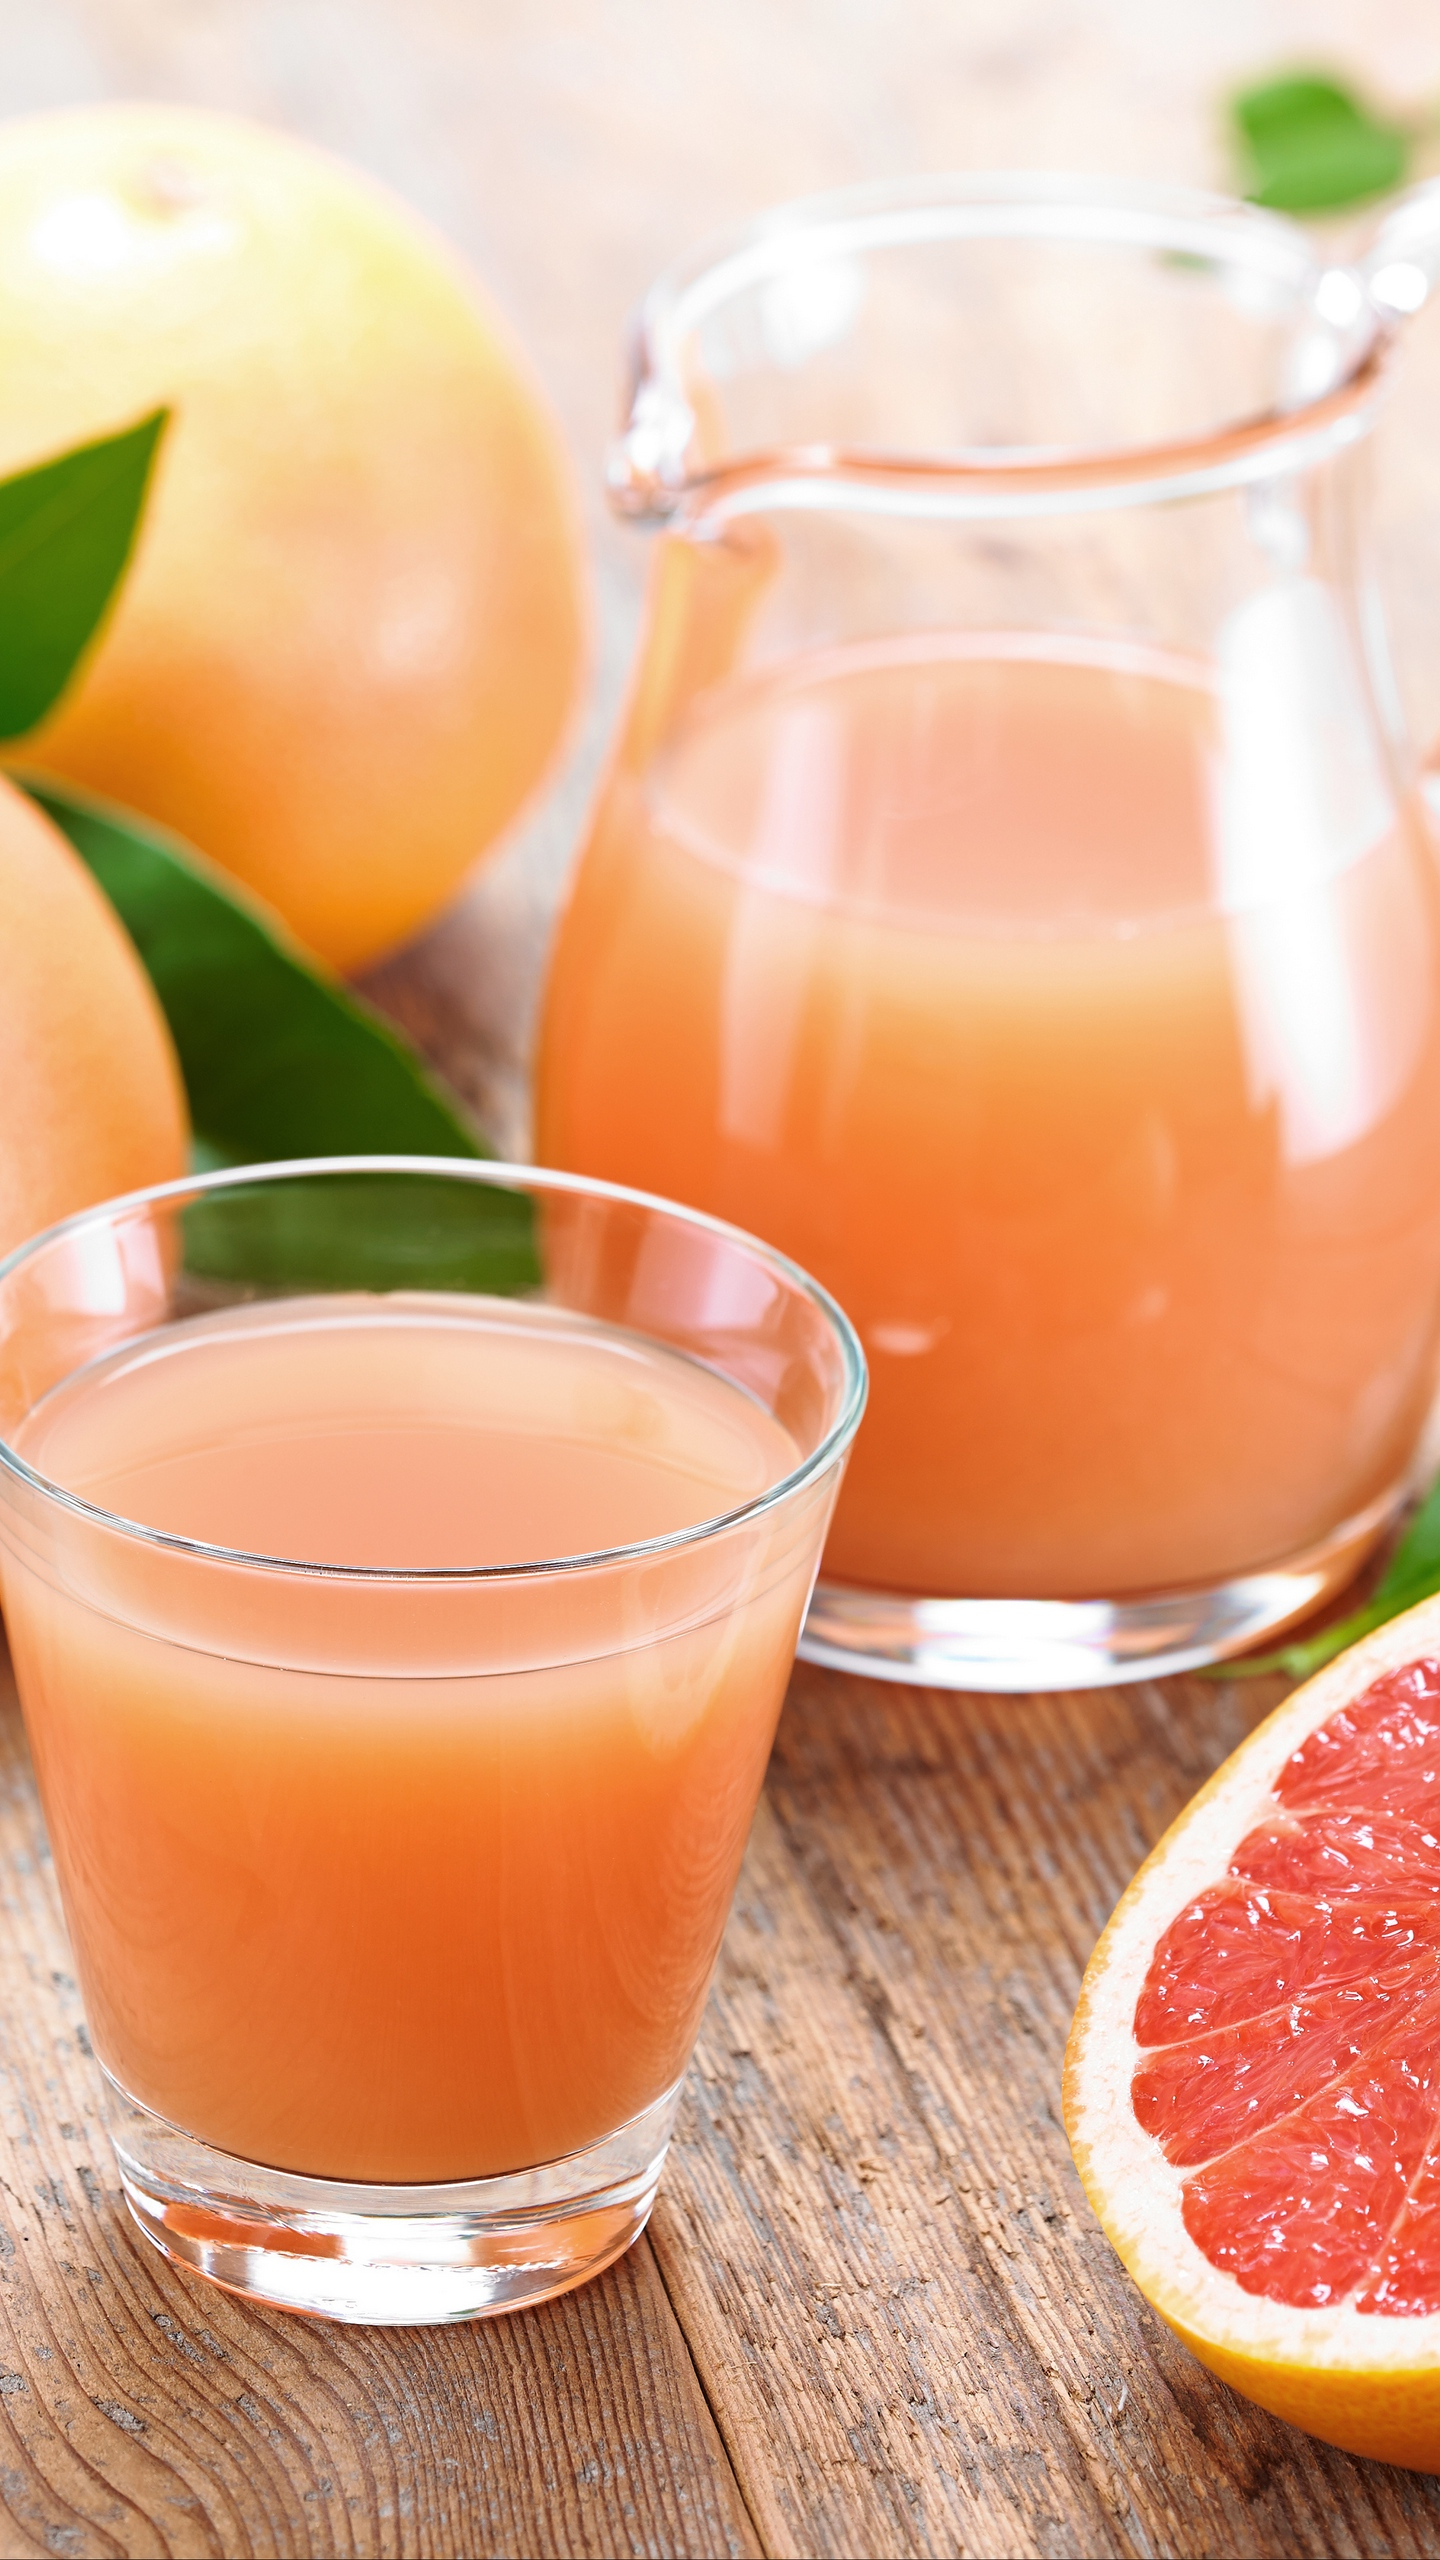 Citrus Juice